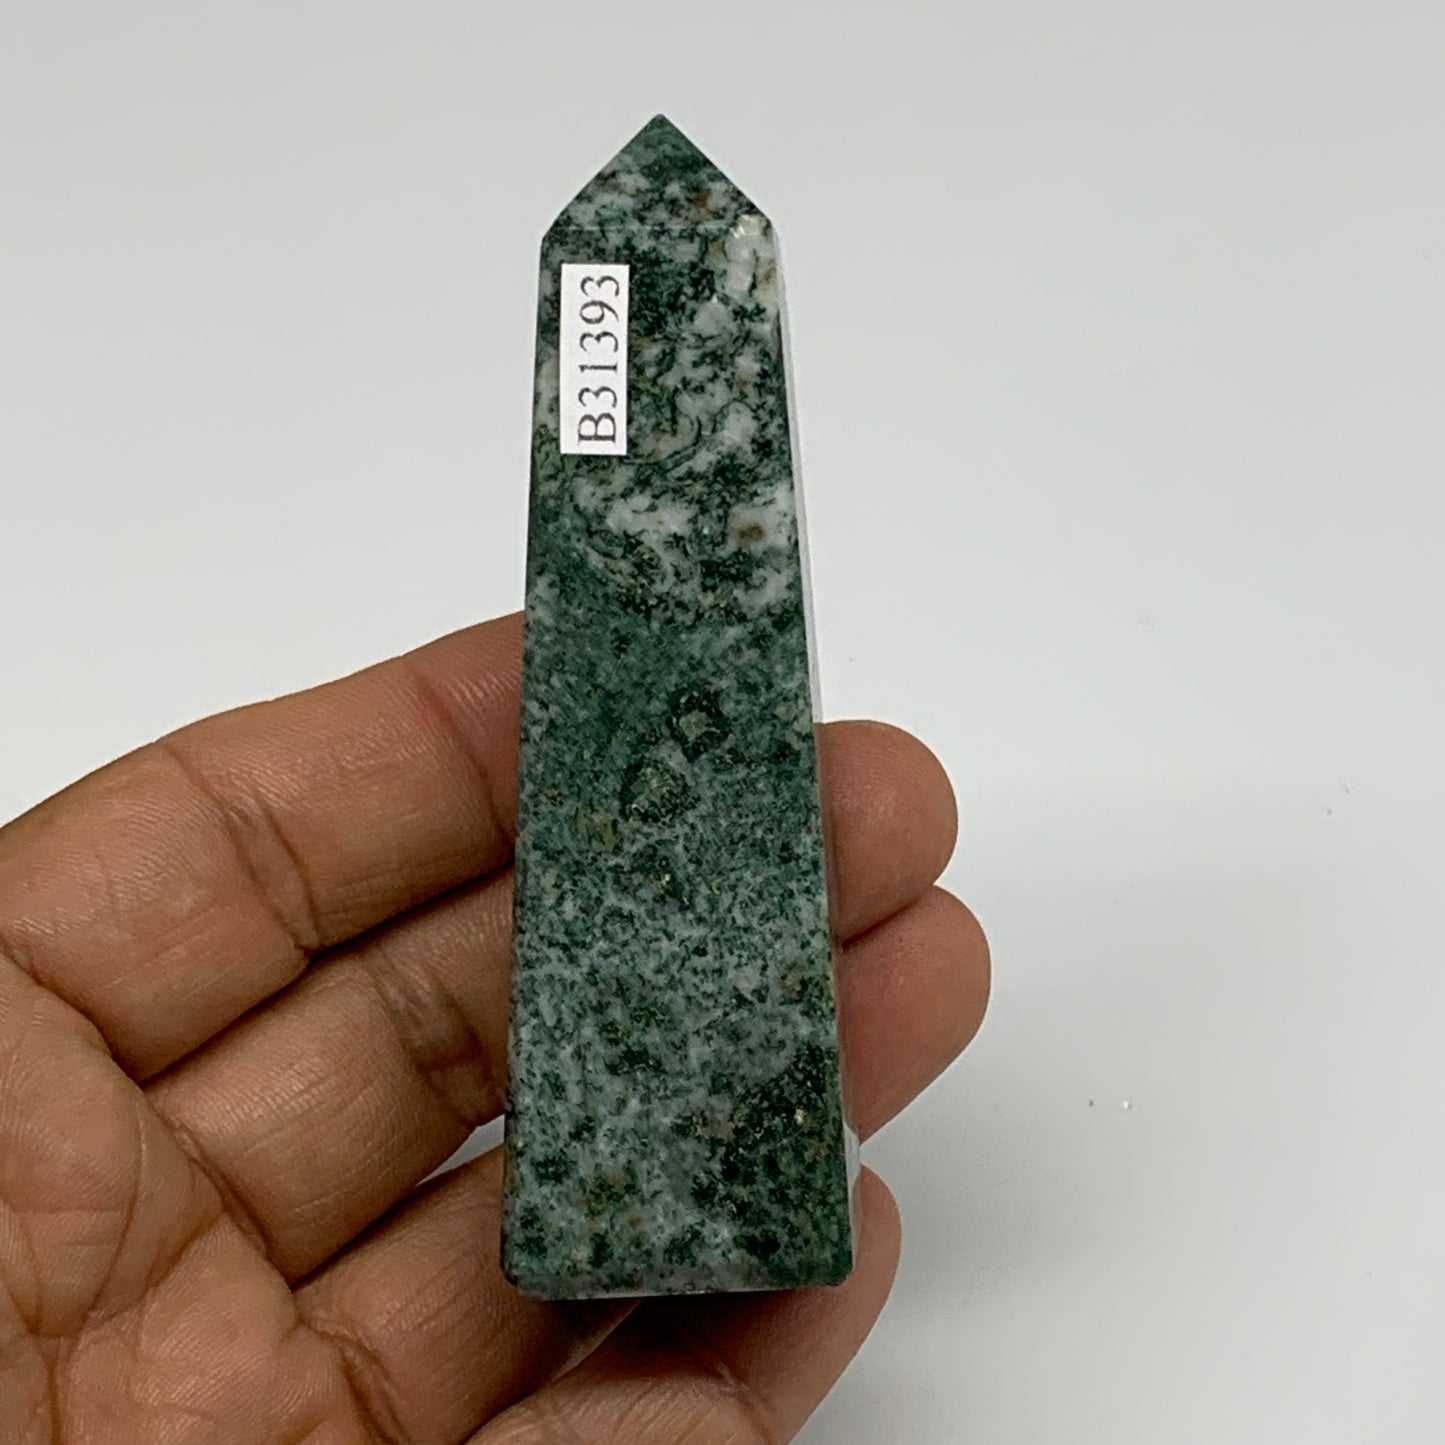 76.4g, 3.2"x0.9", Tree Agate Tower Obelisk Point Crystal @Brazil, B31393